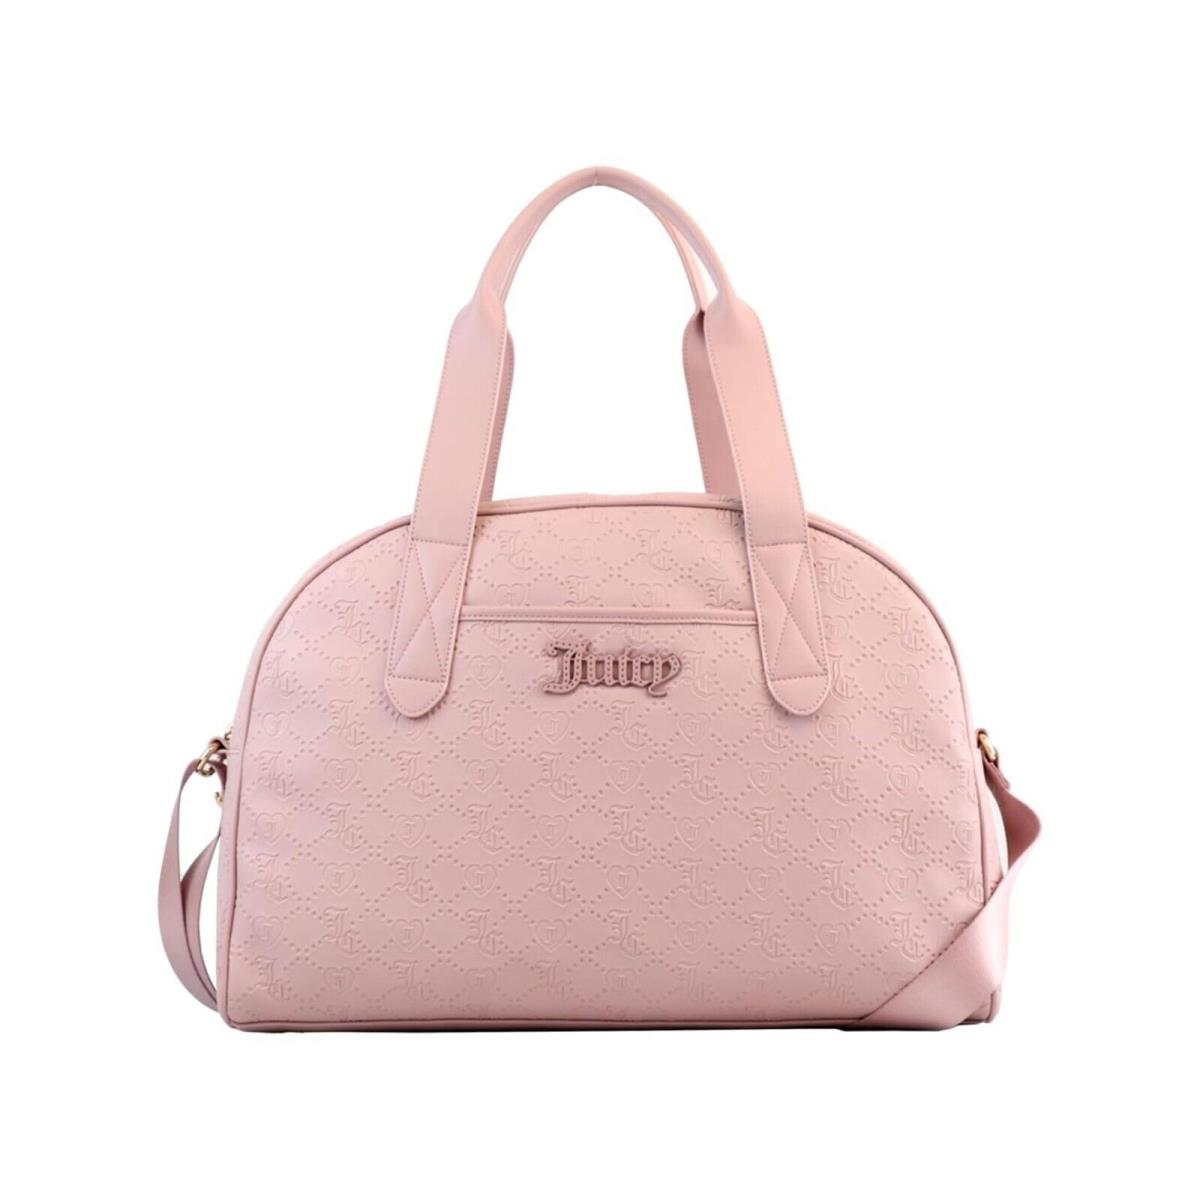 Juicy Couture Semi Charmed Weekender Duffle Bag Dusty Blush Pink